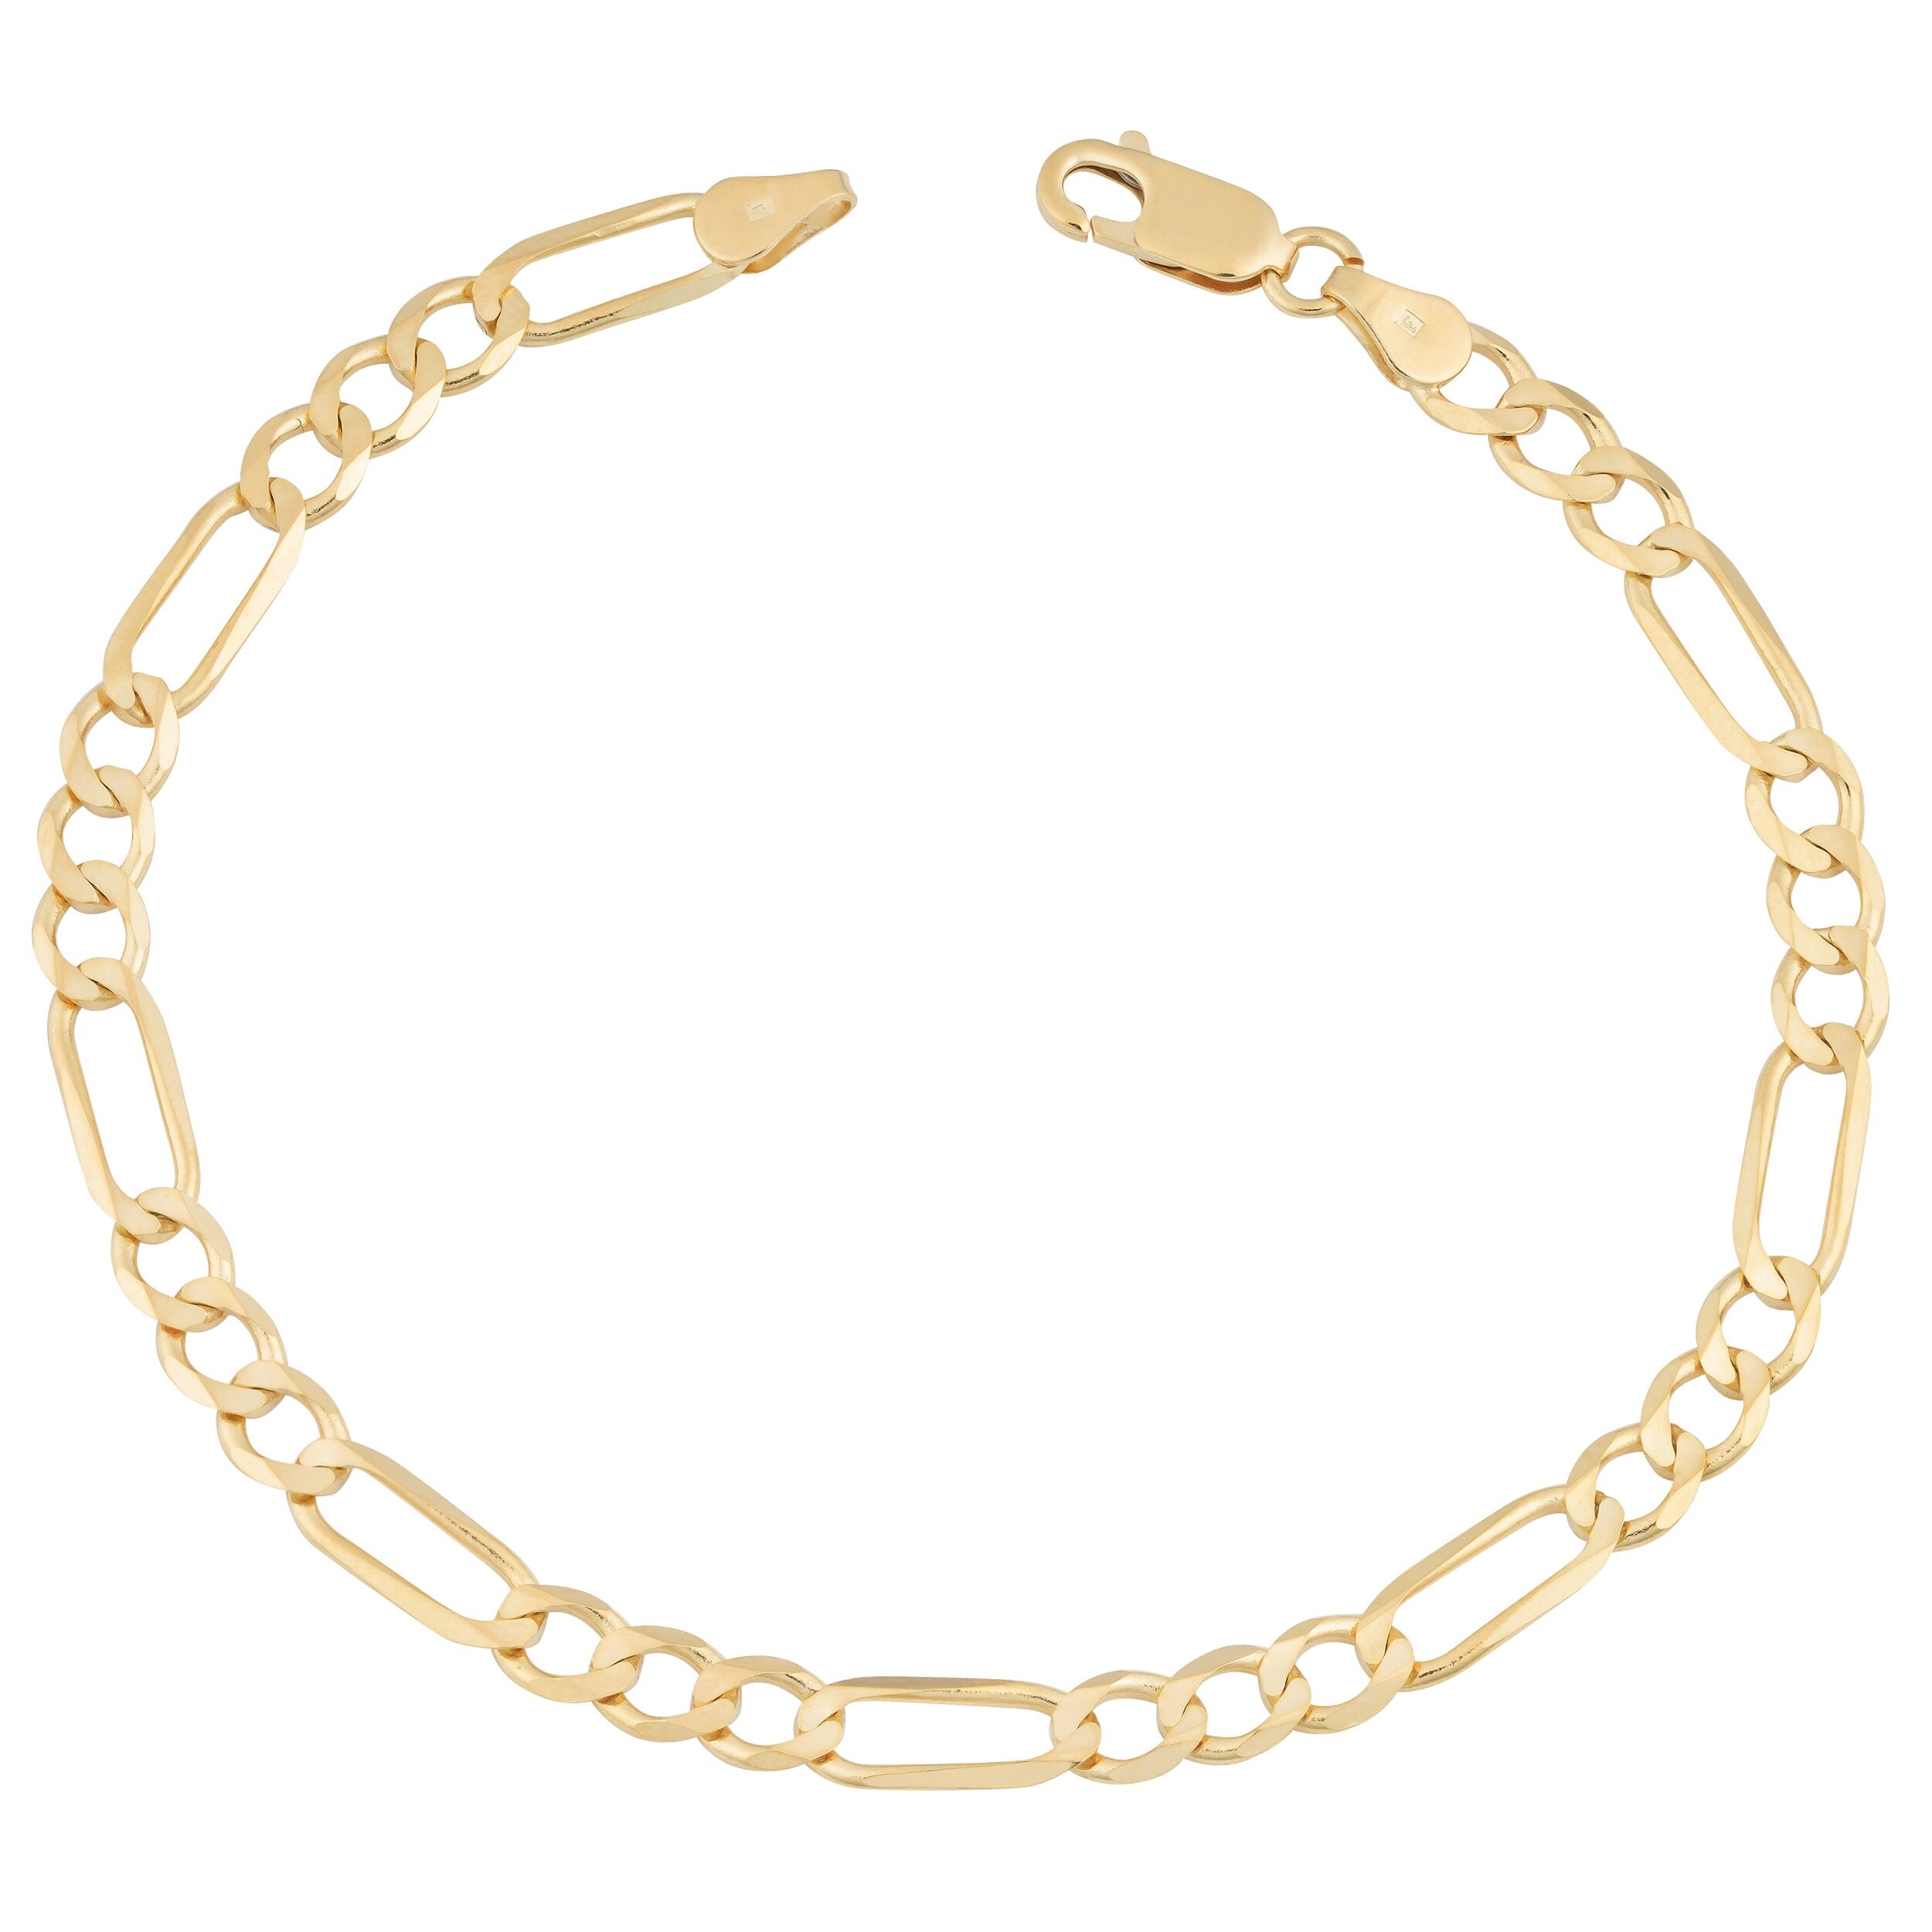 Mcs Jewelry Inc 14 KARAT YELLOW GOLD SOLID FIGARO CHAIN BRACELET (3.1MM)